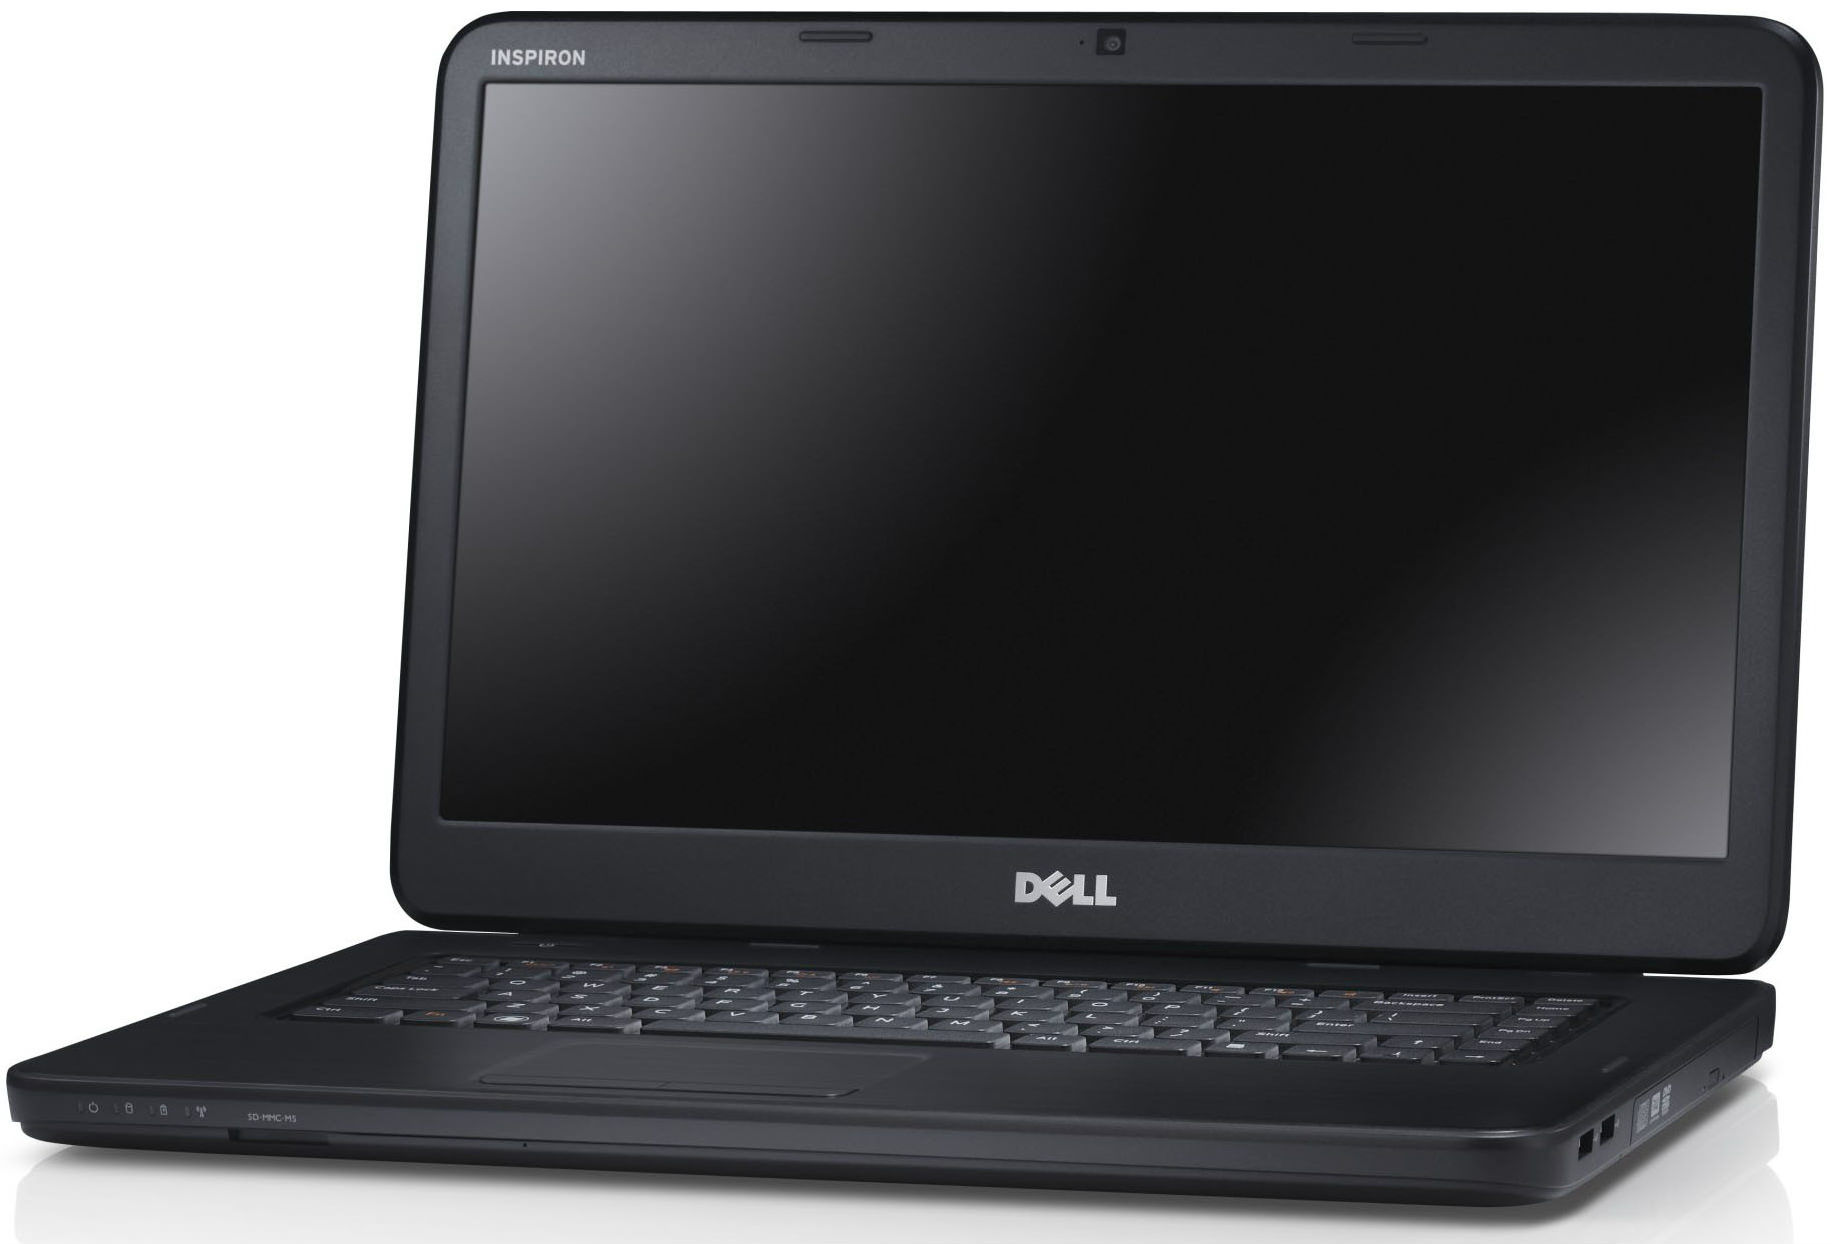 Dell Inspiron 15 3520 Laptop (Core i5 3rd Gen/6 GB/500 GB/DOS) Price